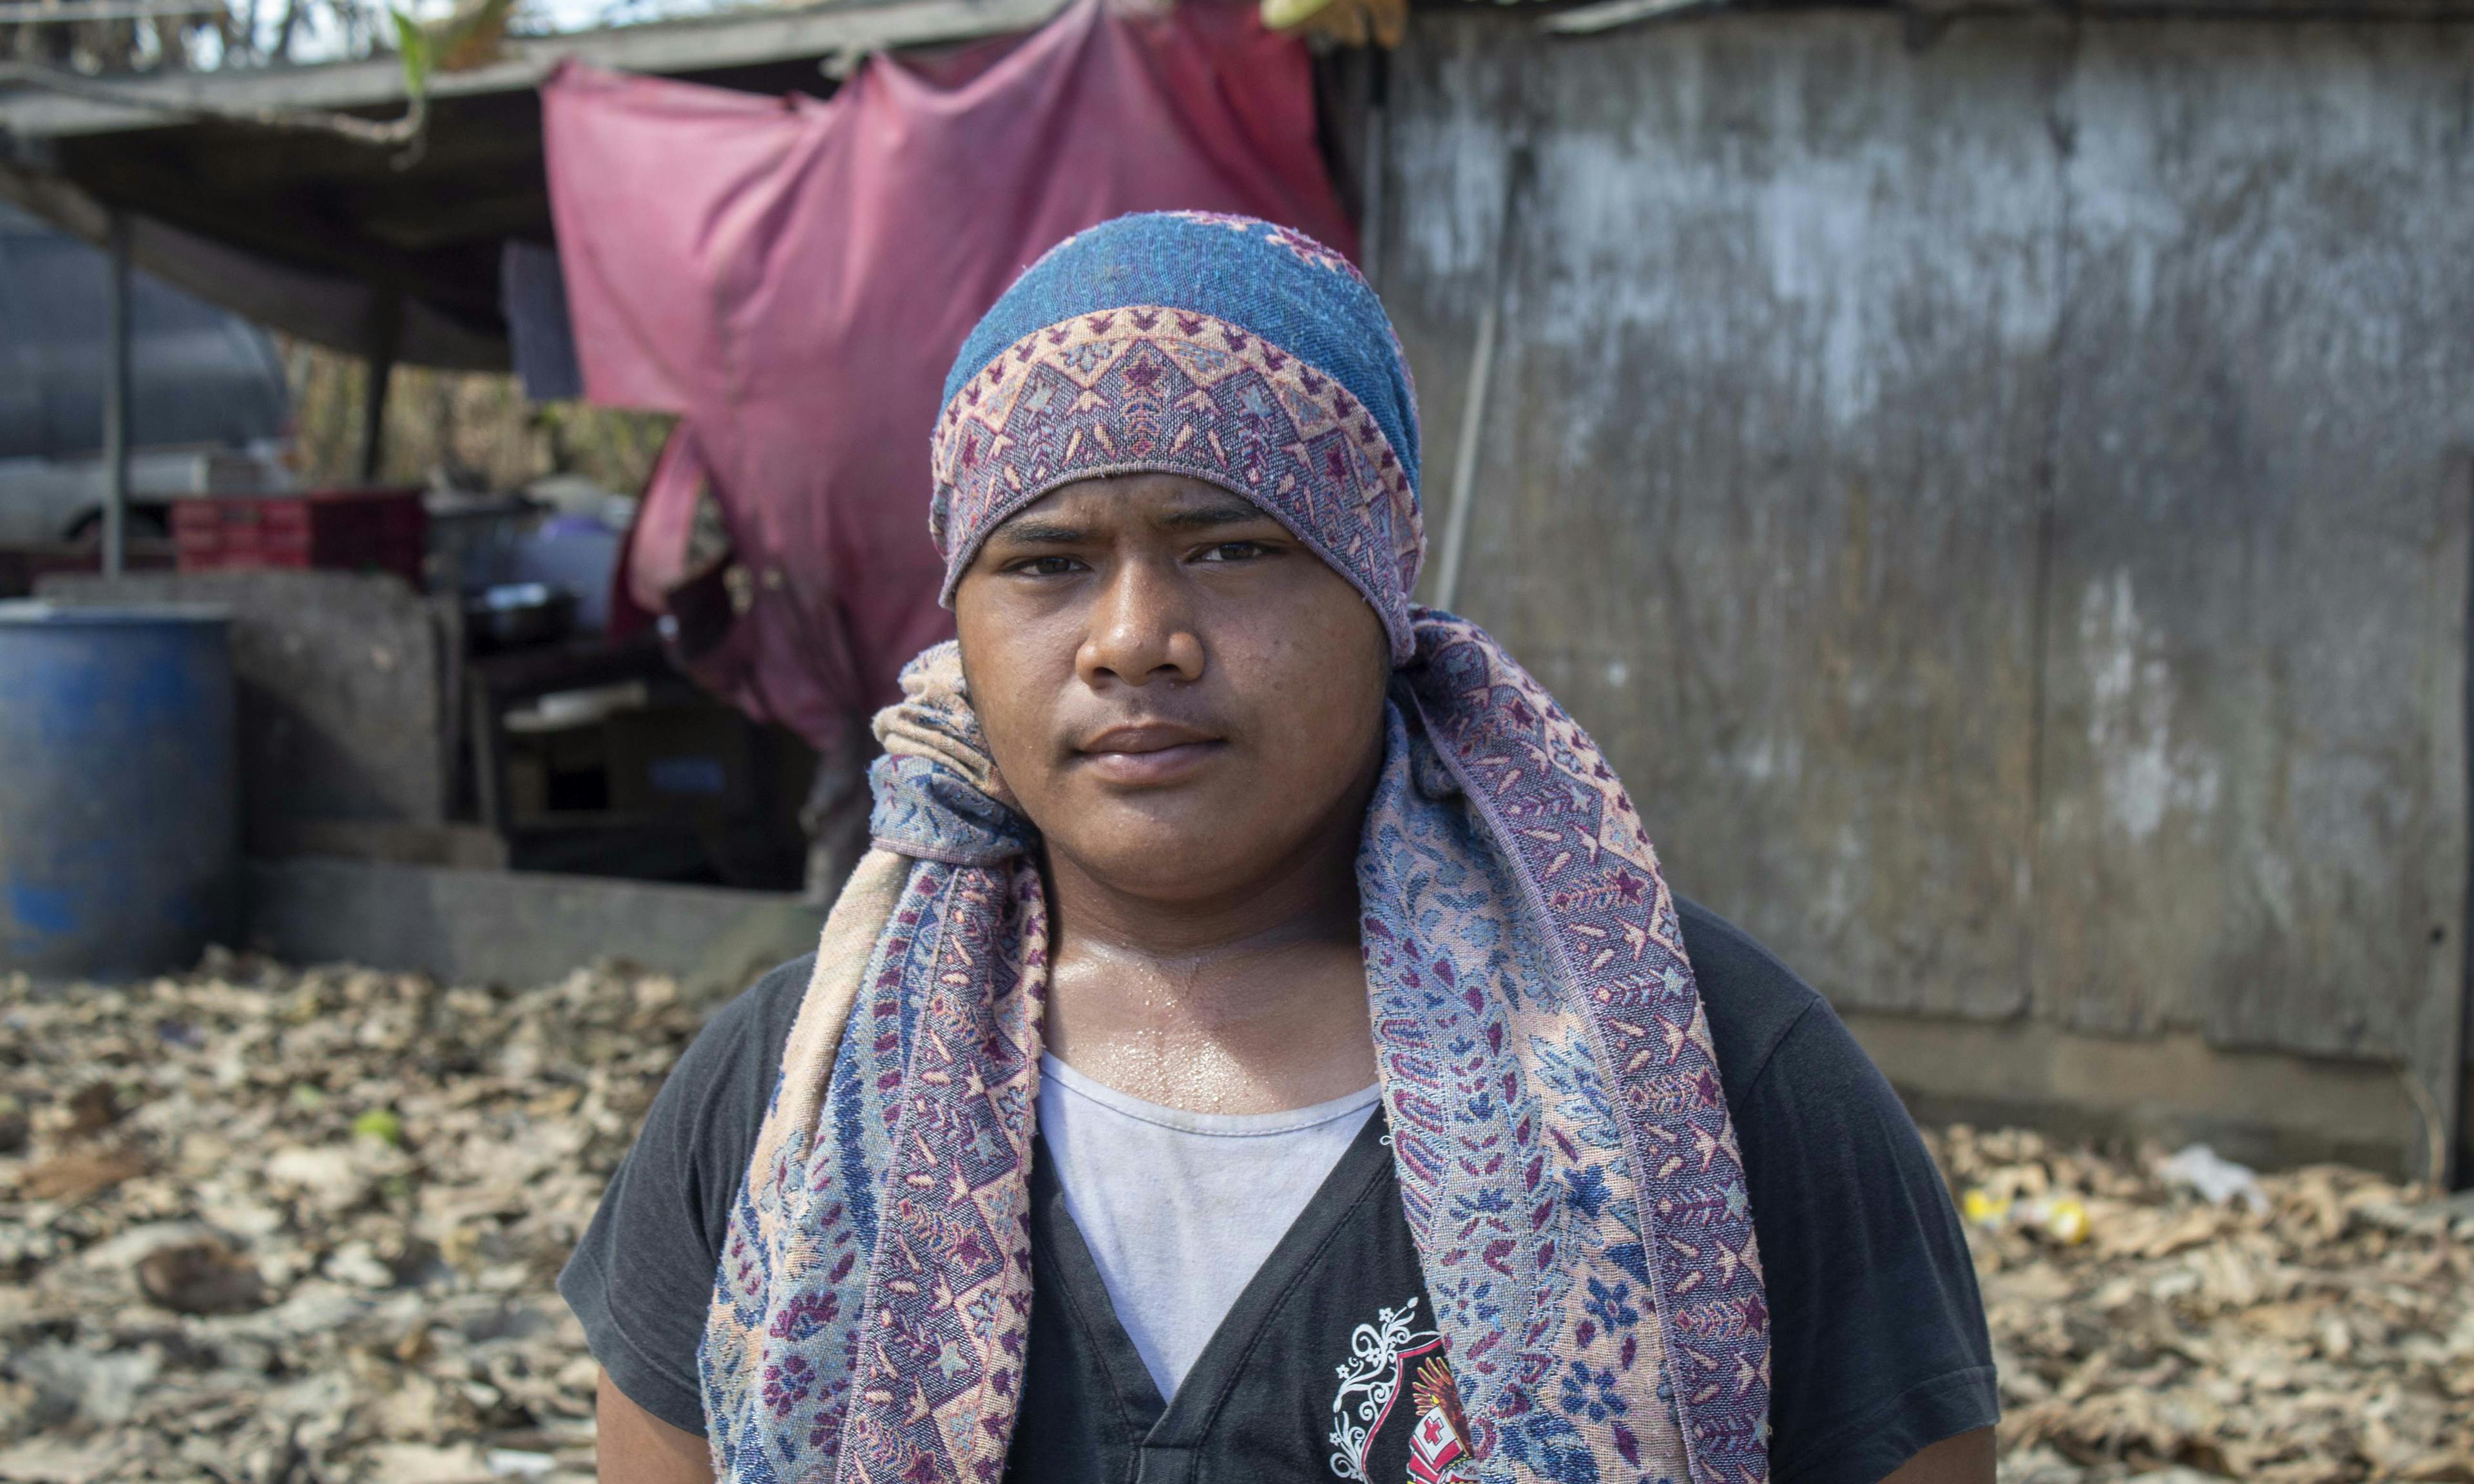 On 22 January 2022, Semisi Fataua, 15 years old, stands in front of his home in Kanokupolu village on Tongatapu, Tonga’s main island, with damage caused by the Hunga Tonga-Hunga Ha’apai underwater volcano eruption and tsunami. 